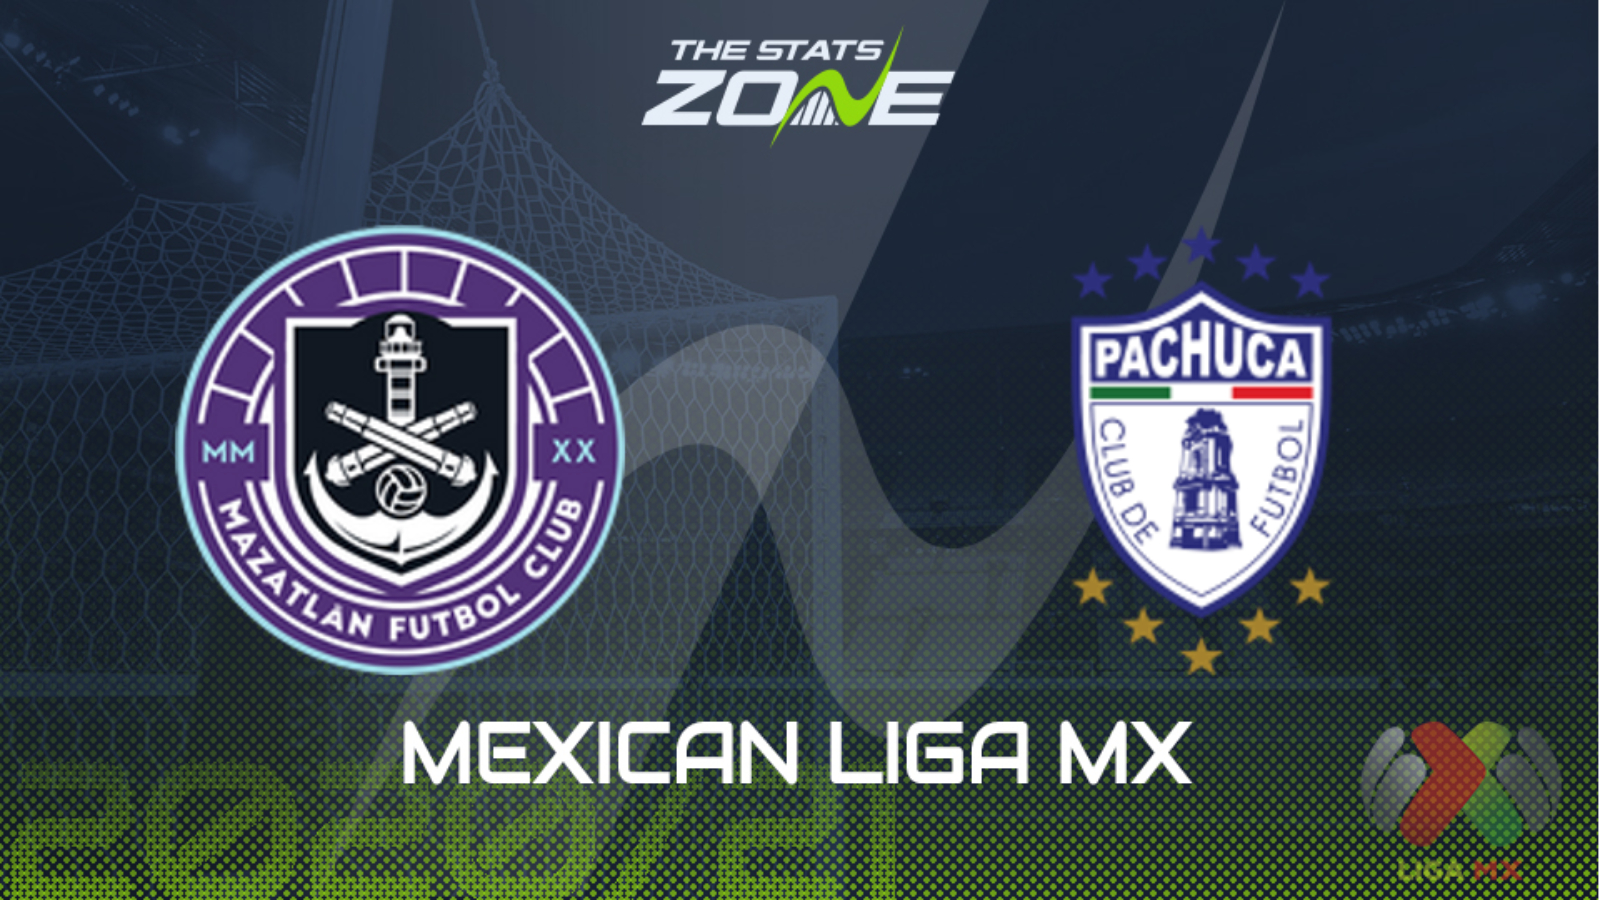 2020 21 Mexican Liga Mx Mazatlan Vs Pachuca Preview Prediction The Stats Zone